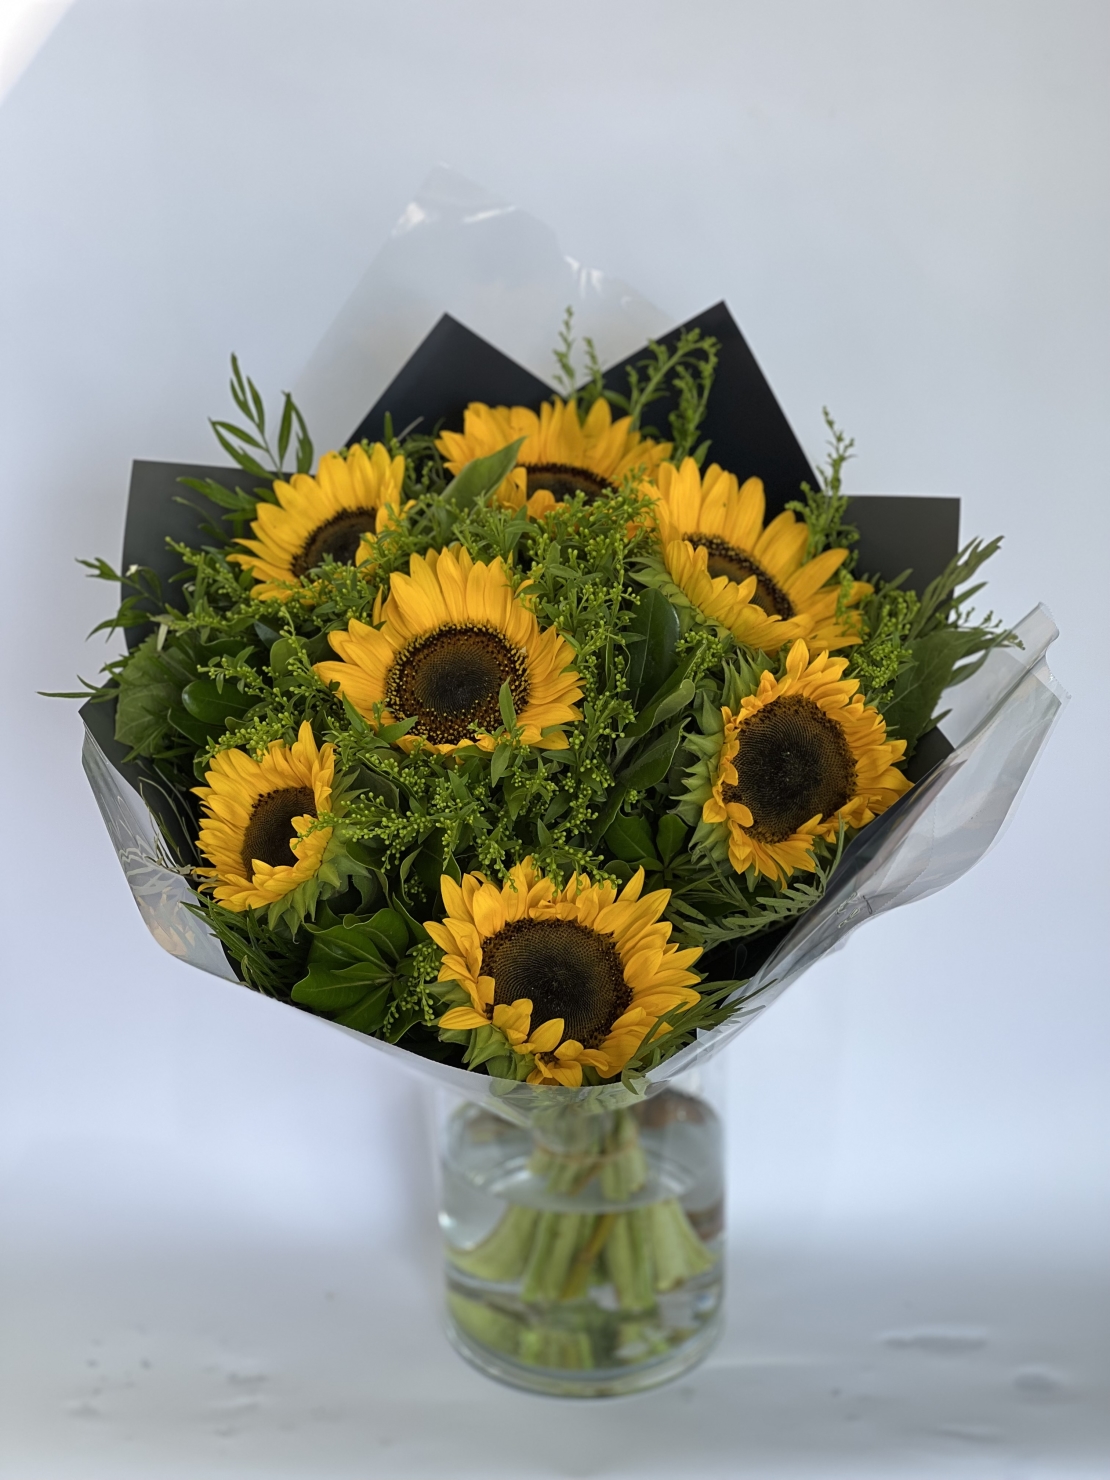 A bouquet of sunflowers like the sun